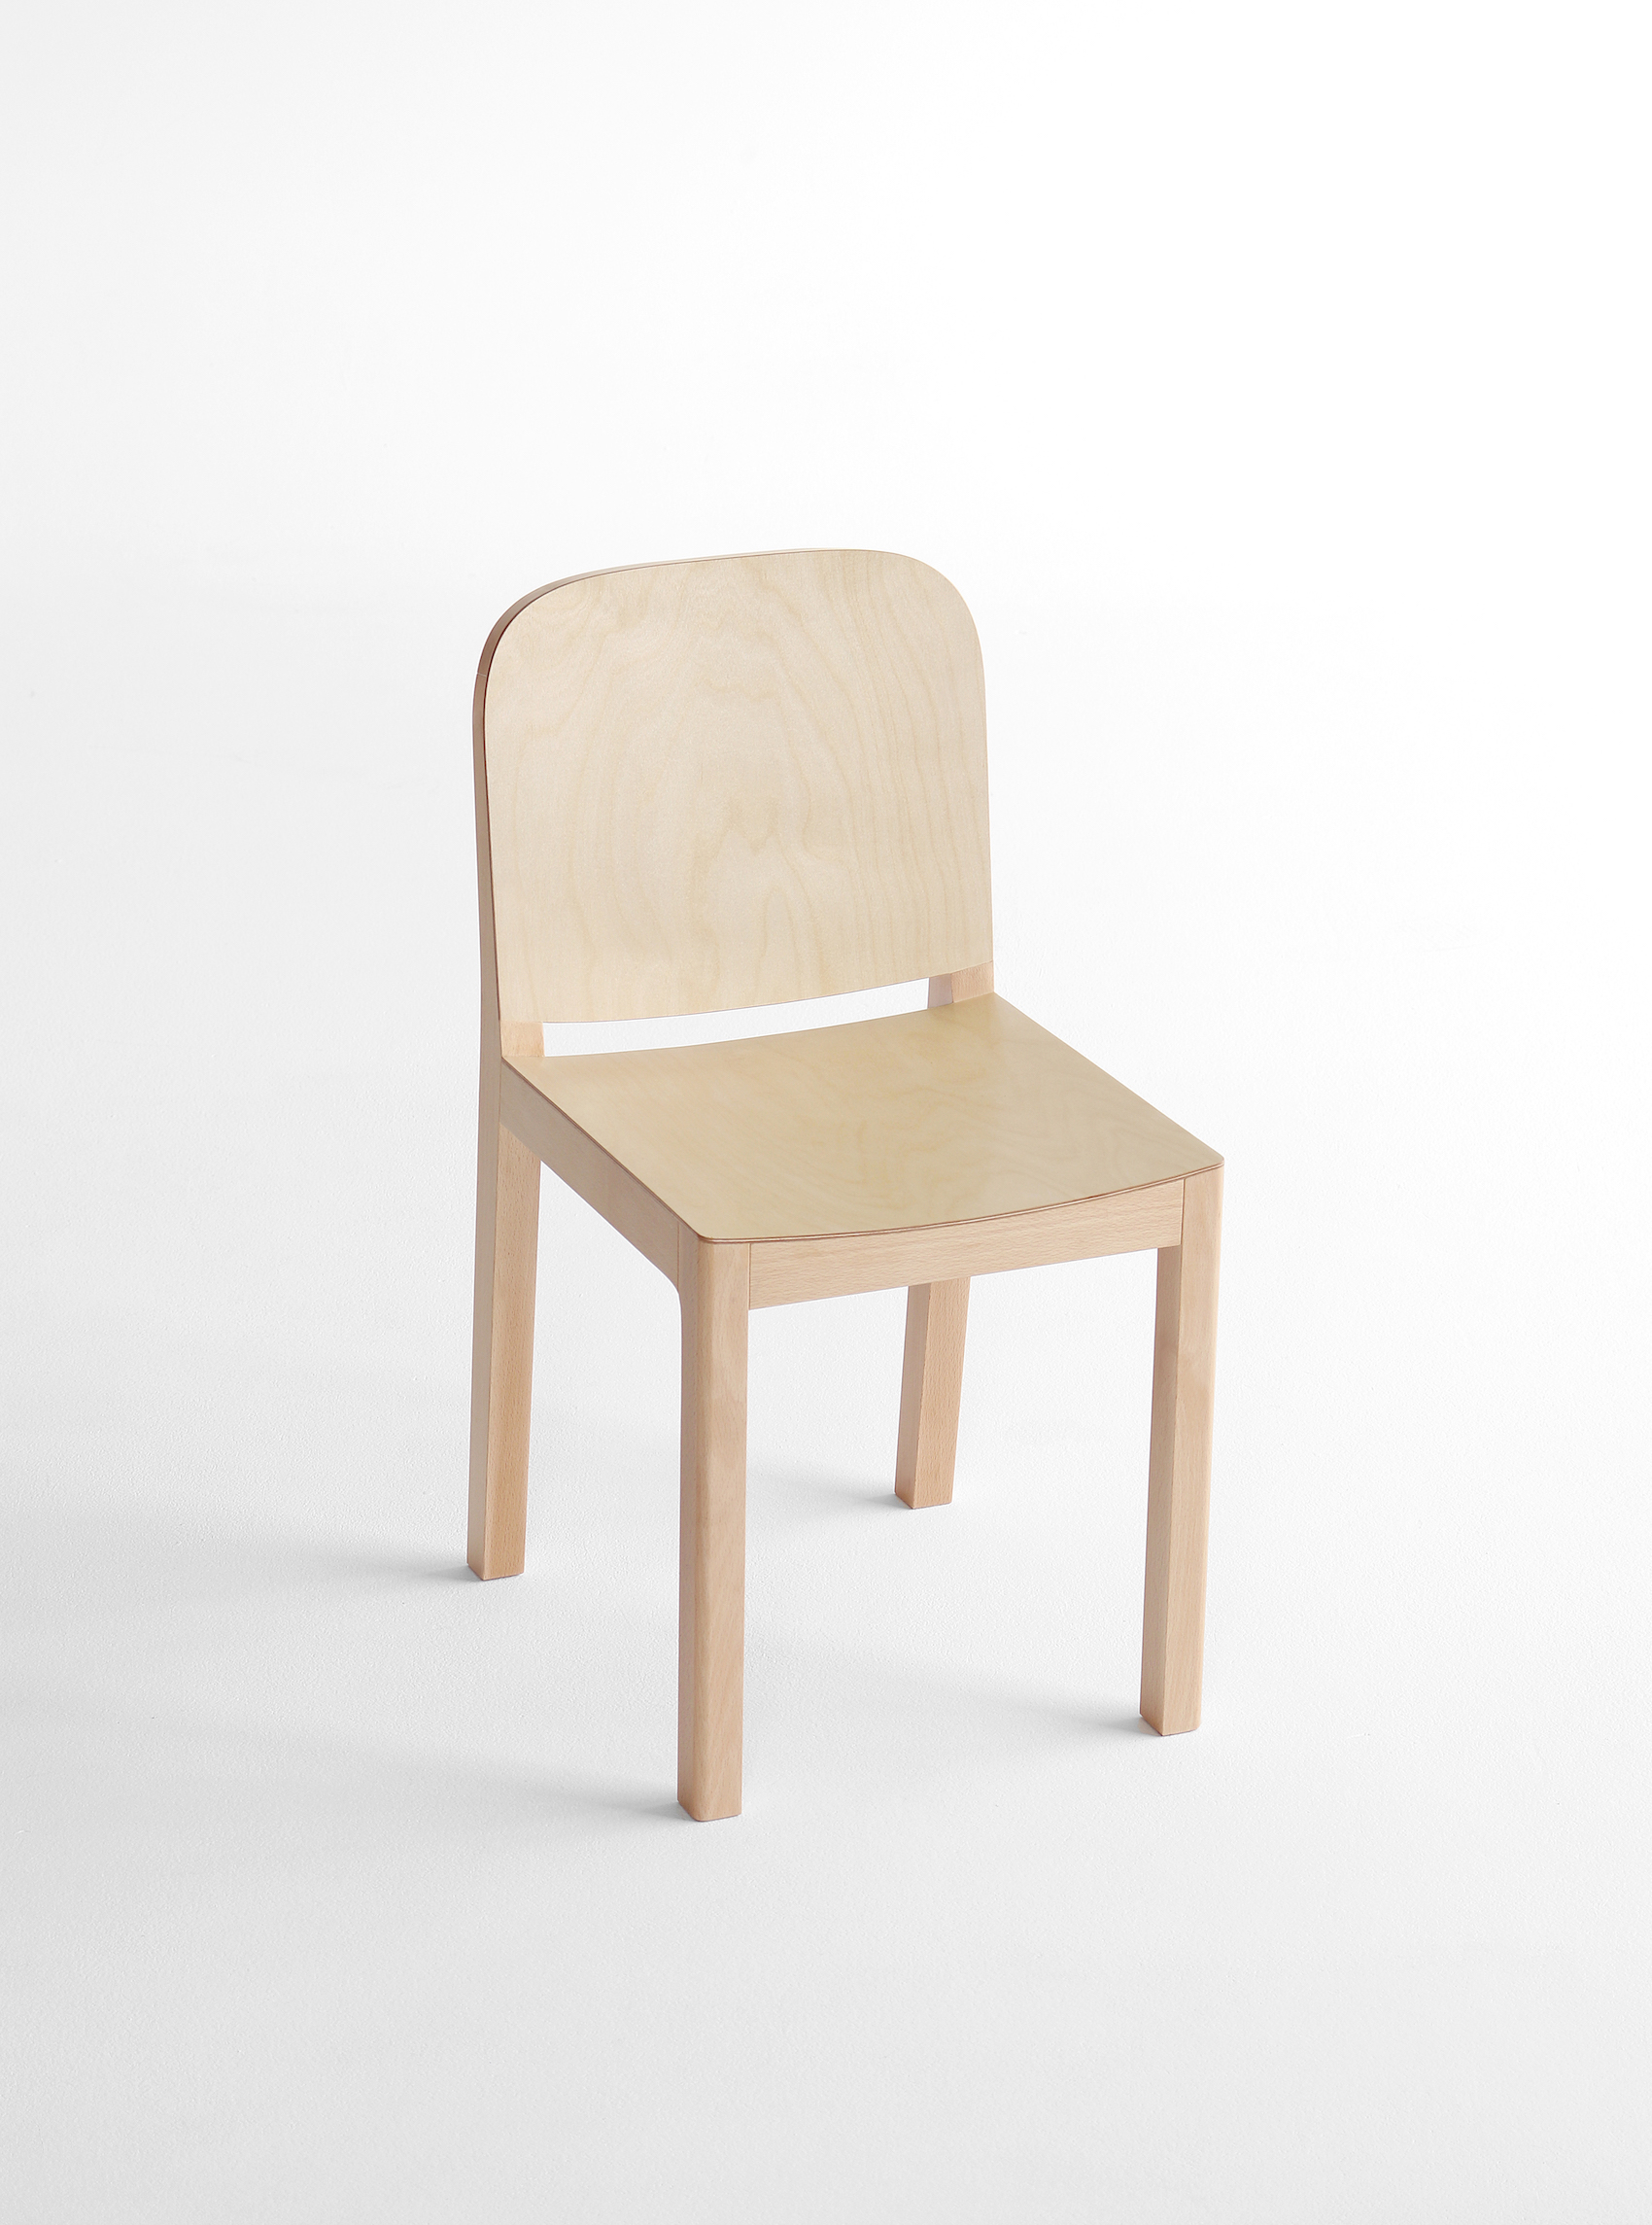 Gyeol Chair by Jungmo Yang